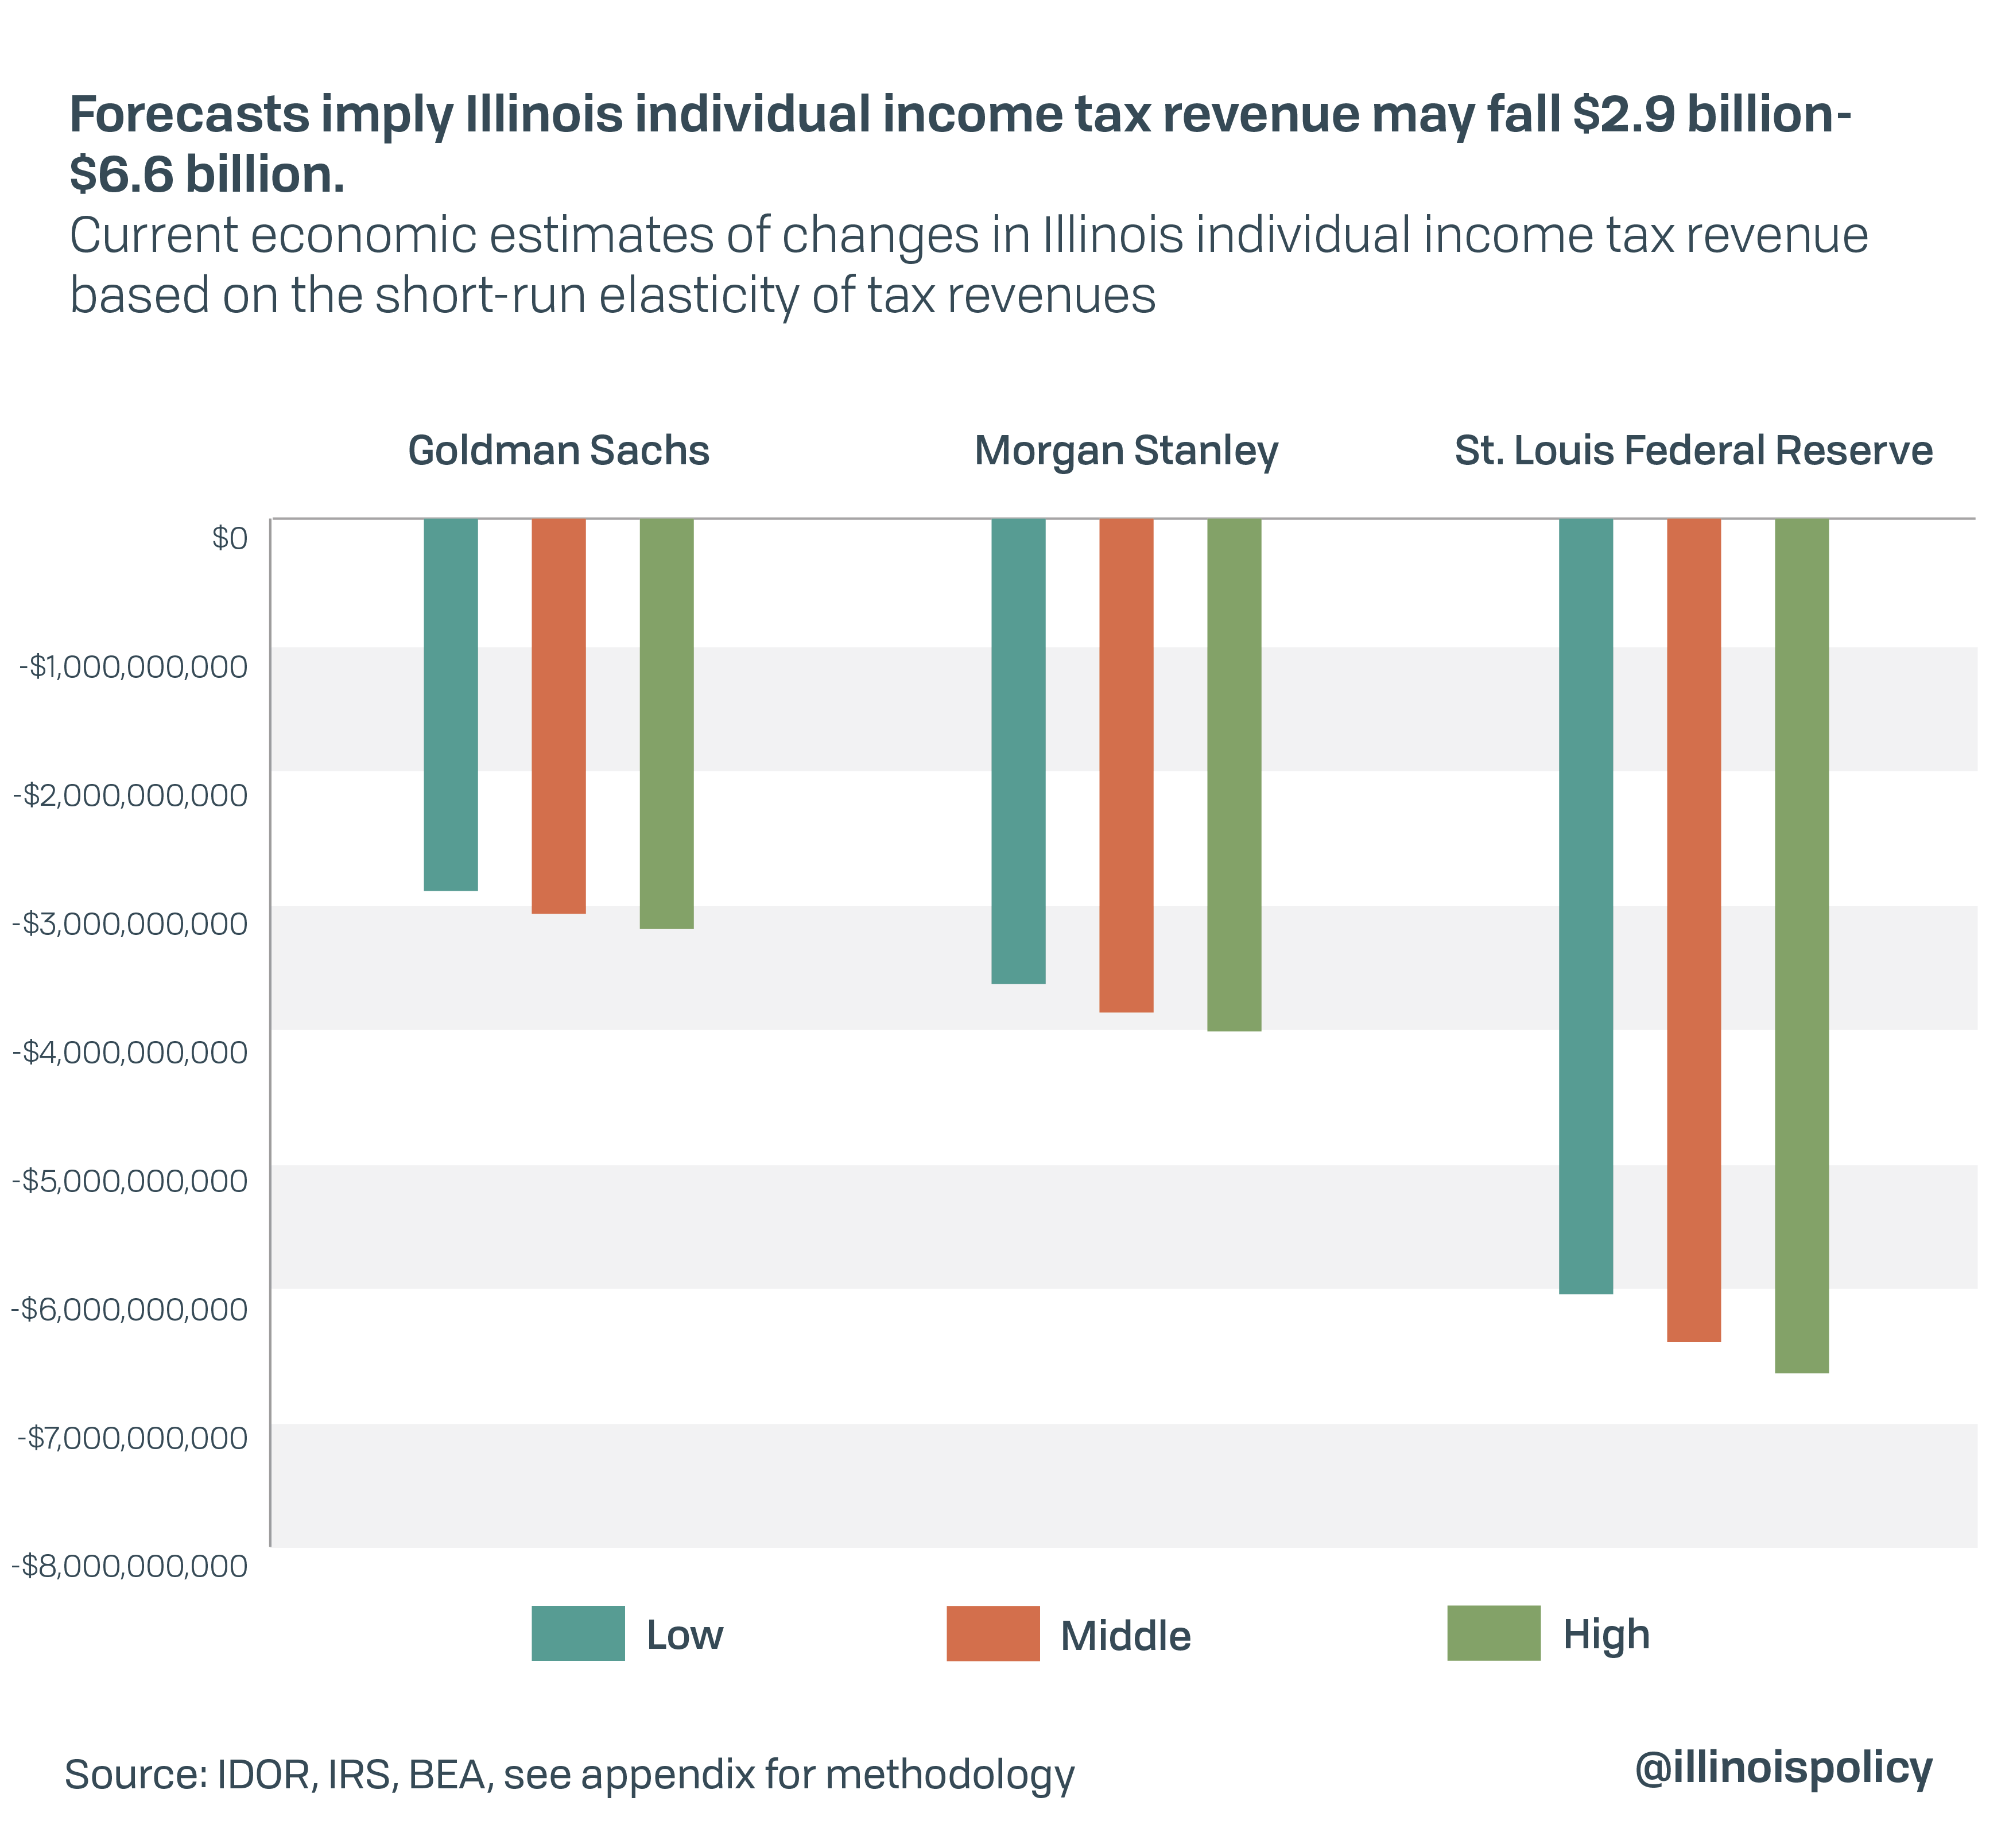 Forecasts imply Illinois individual income tax revenue may fall $2.9 billion-$6.6 billion